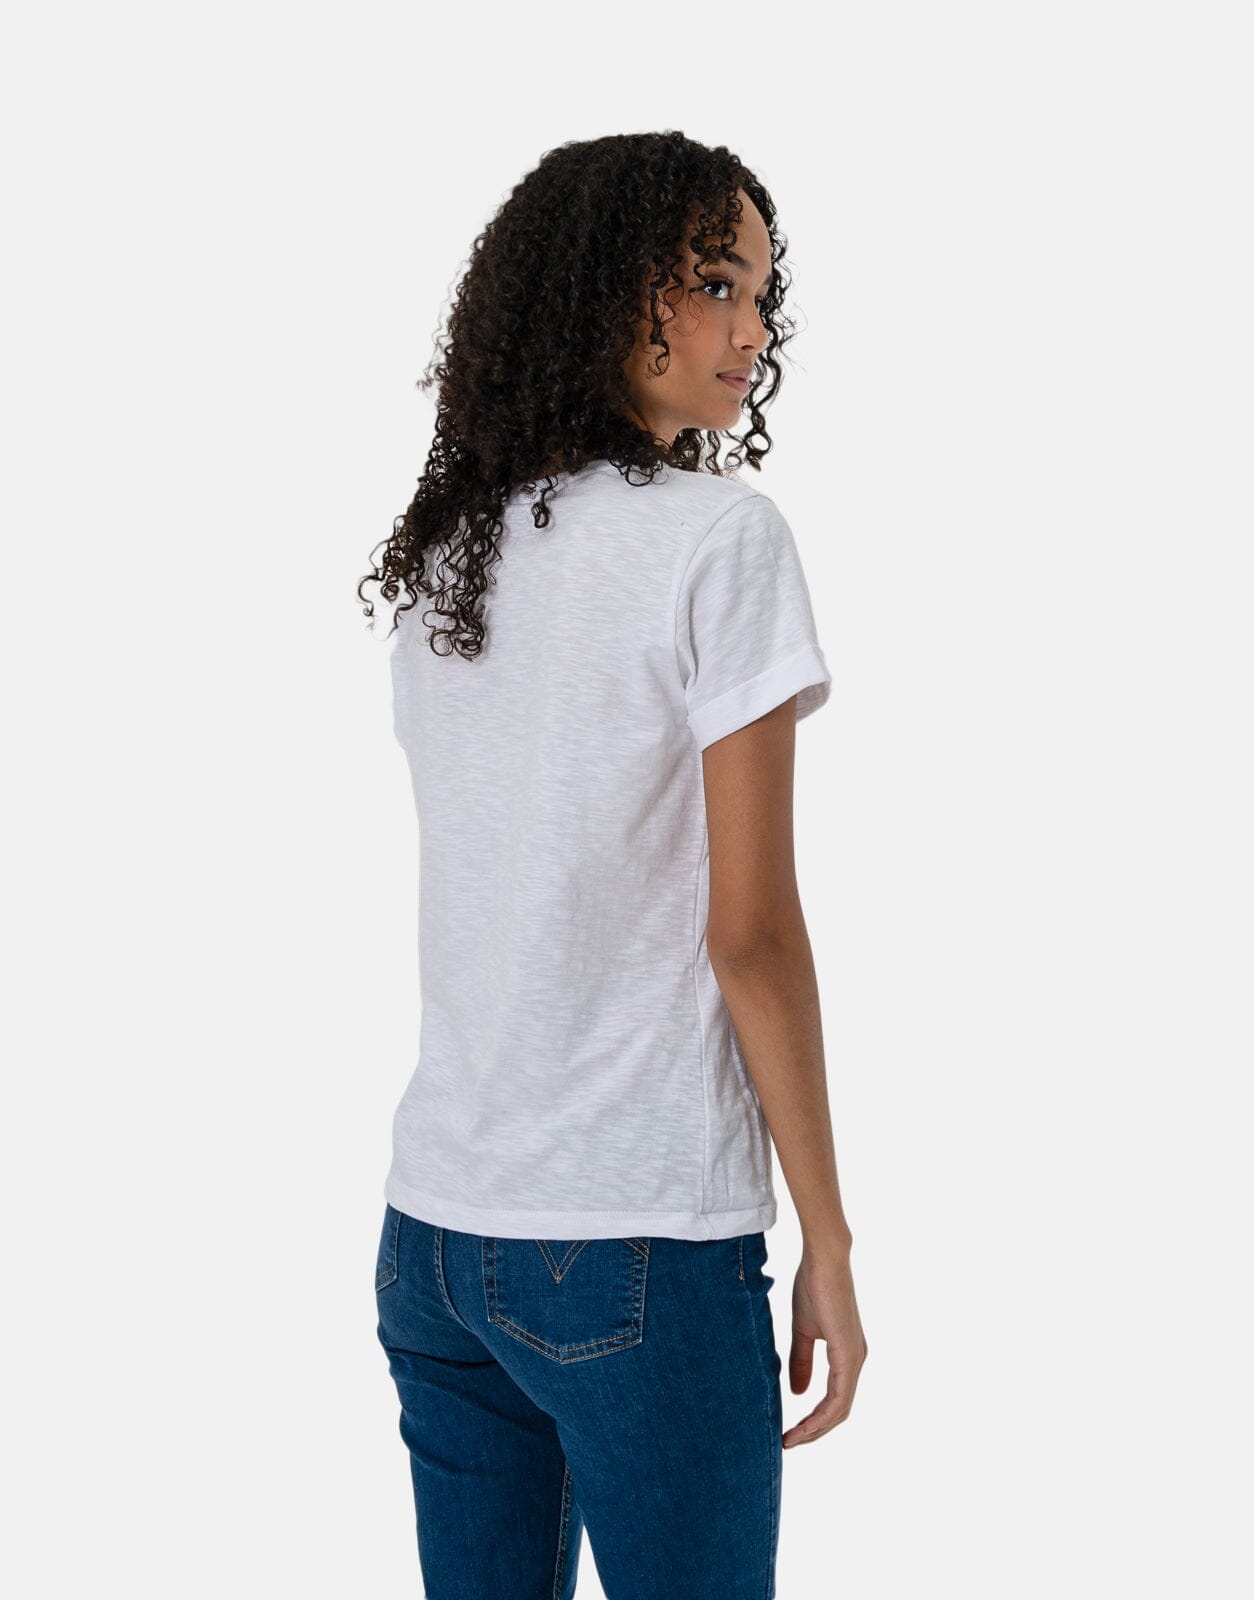 Guess College T-Shirt White - Subwear